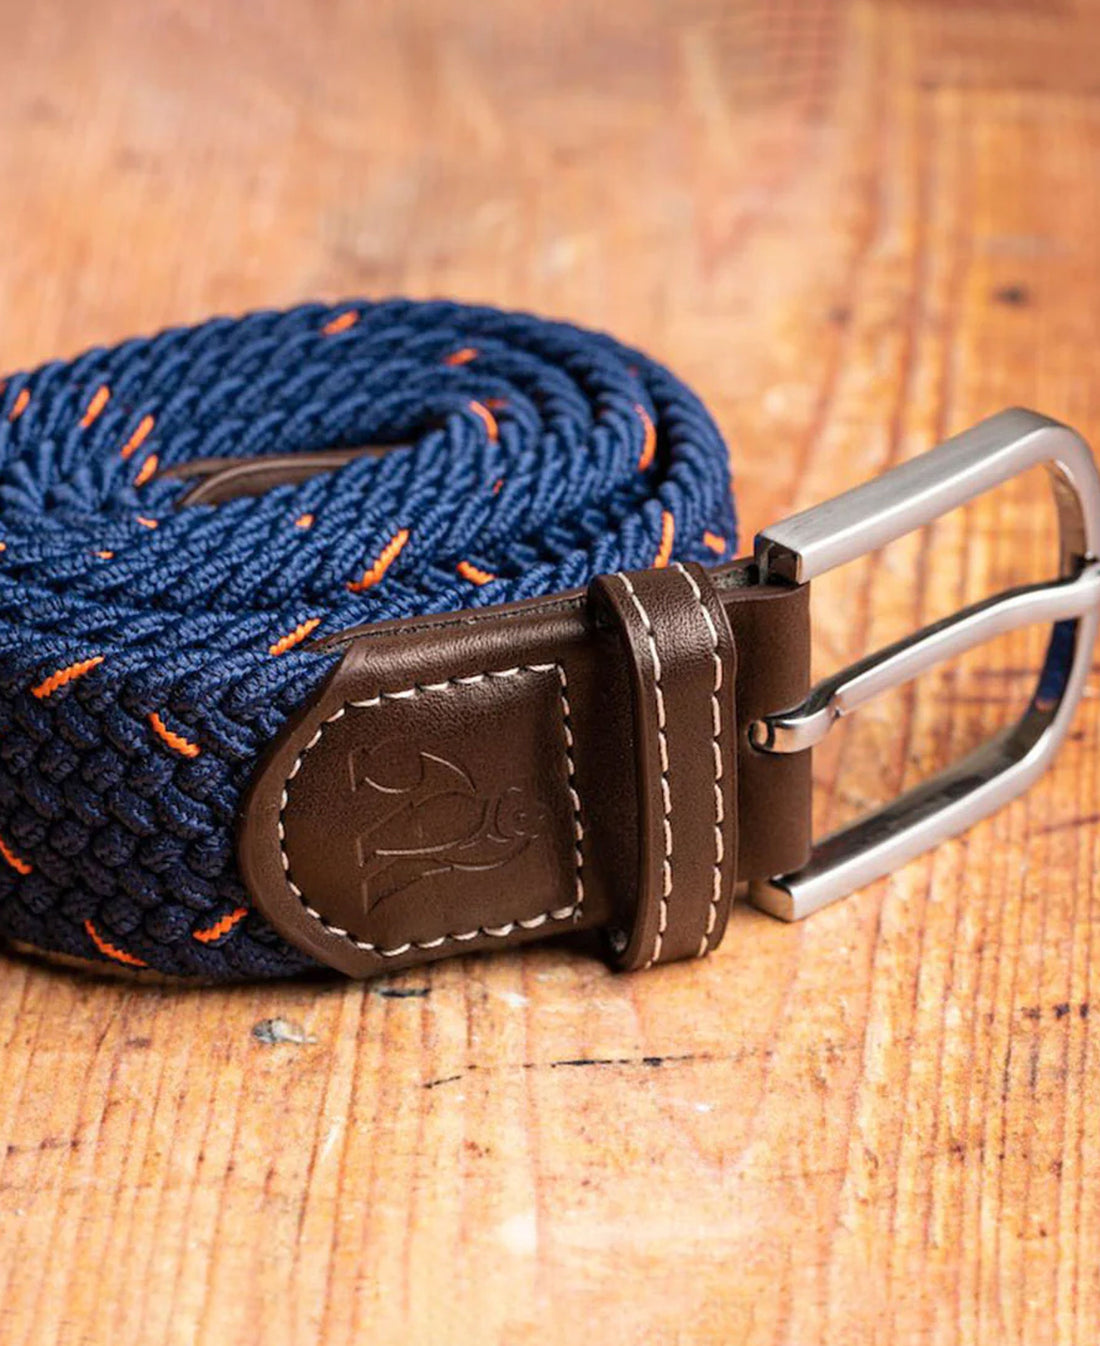 Darron - Lt Tan - Woven Leather Belt Textured Buckle, Belts